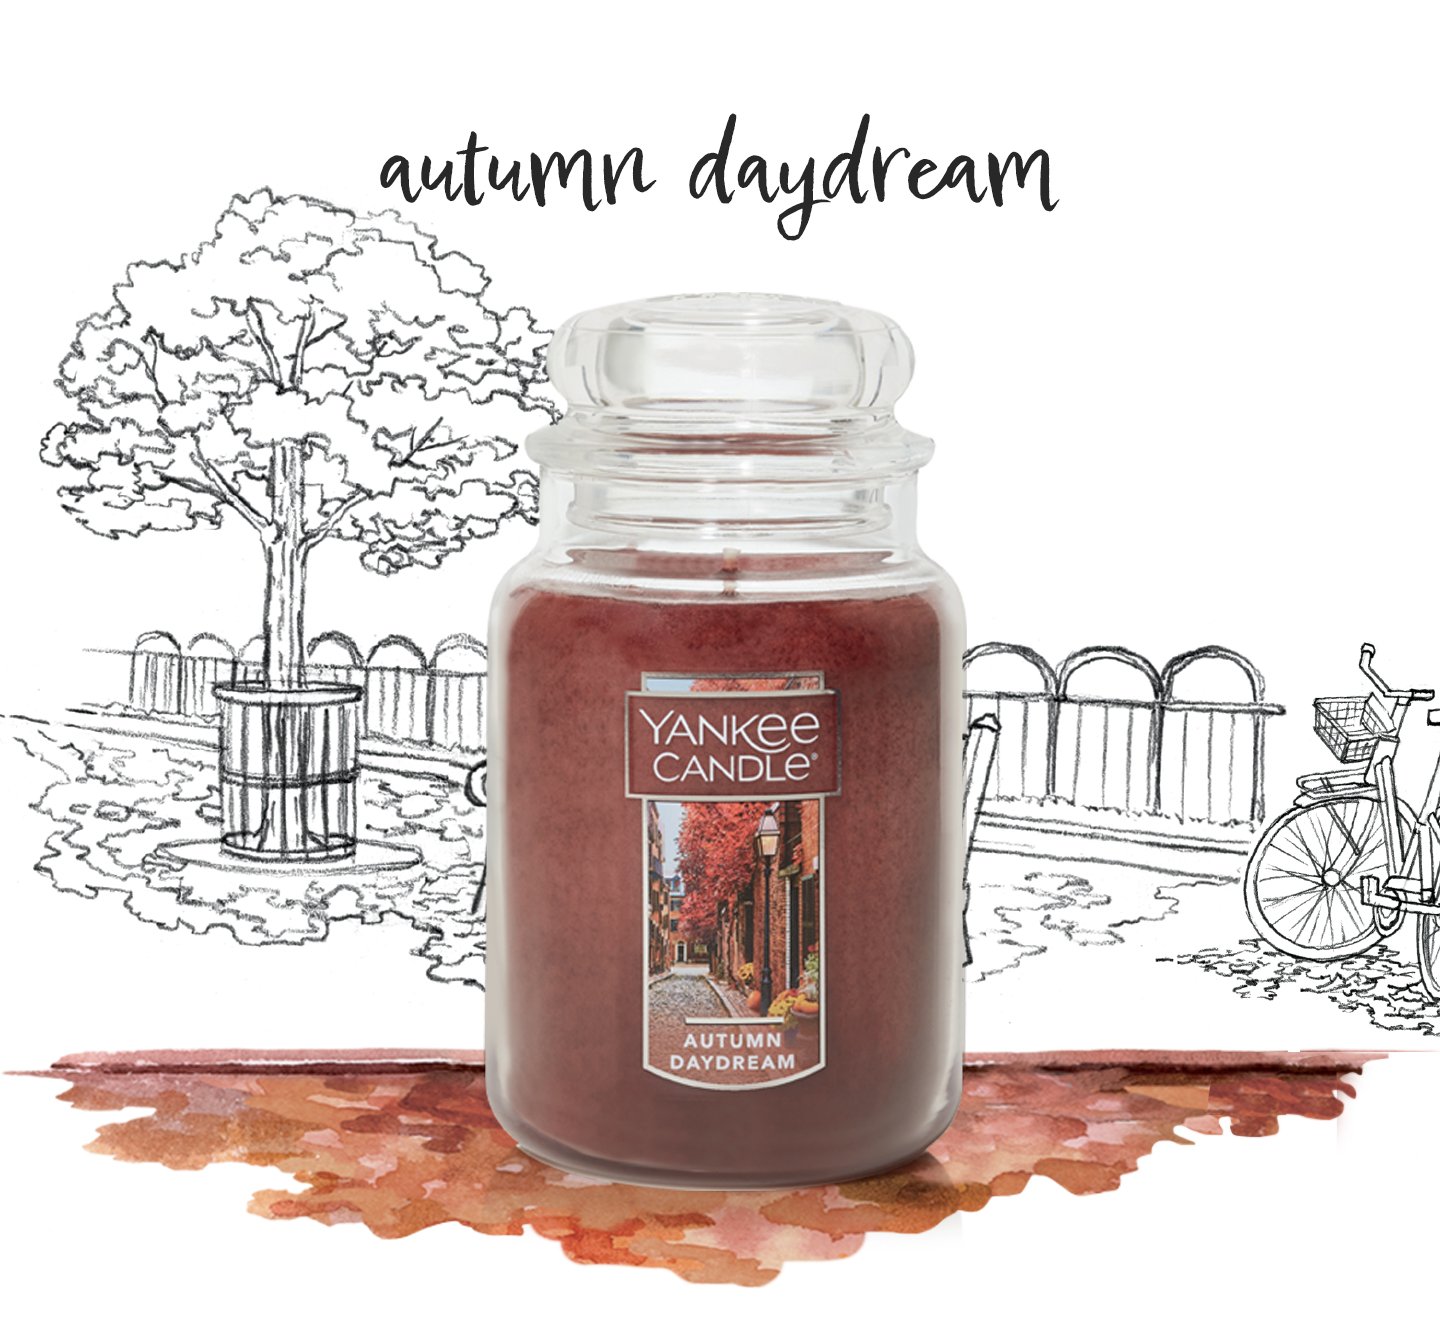 autumn daydream signature large tumbler candle in illustrated city park scene